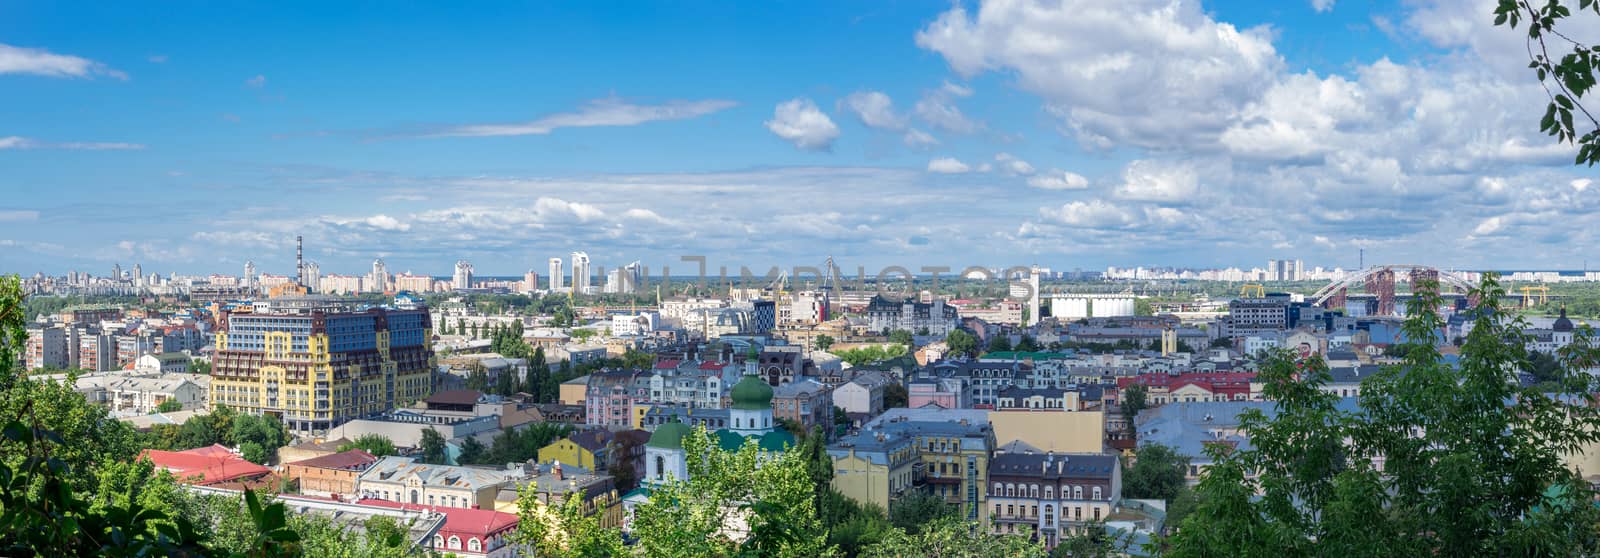 European city panorama. Kiev cityscape by VeraVerano